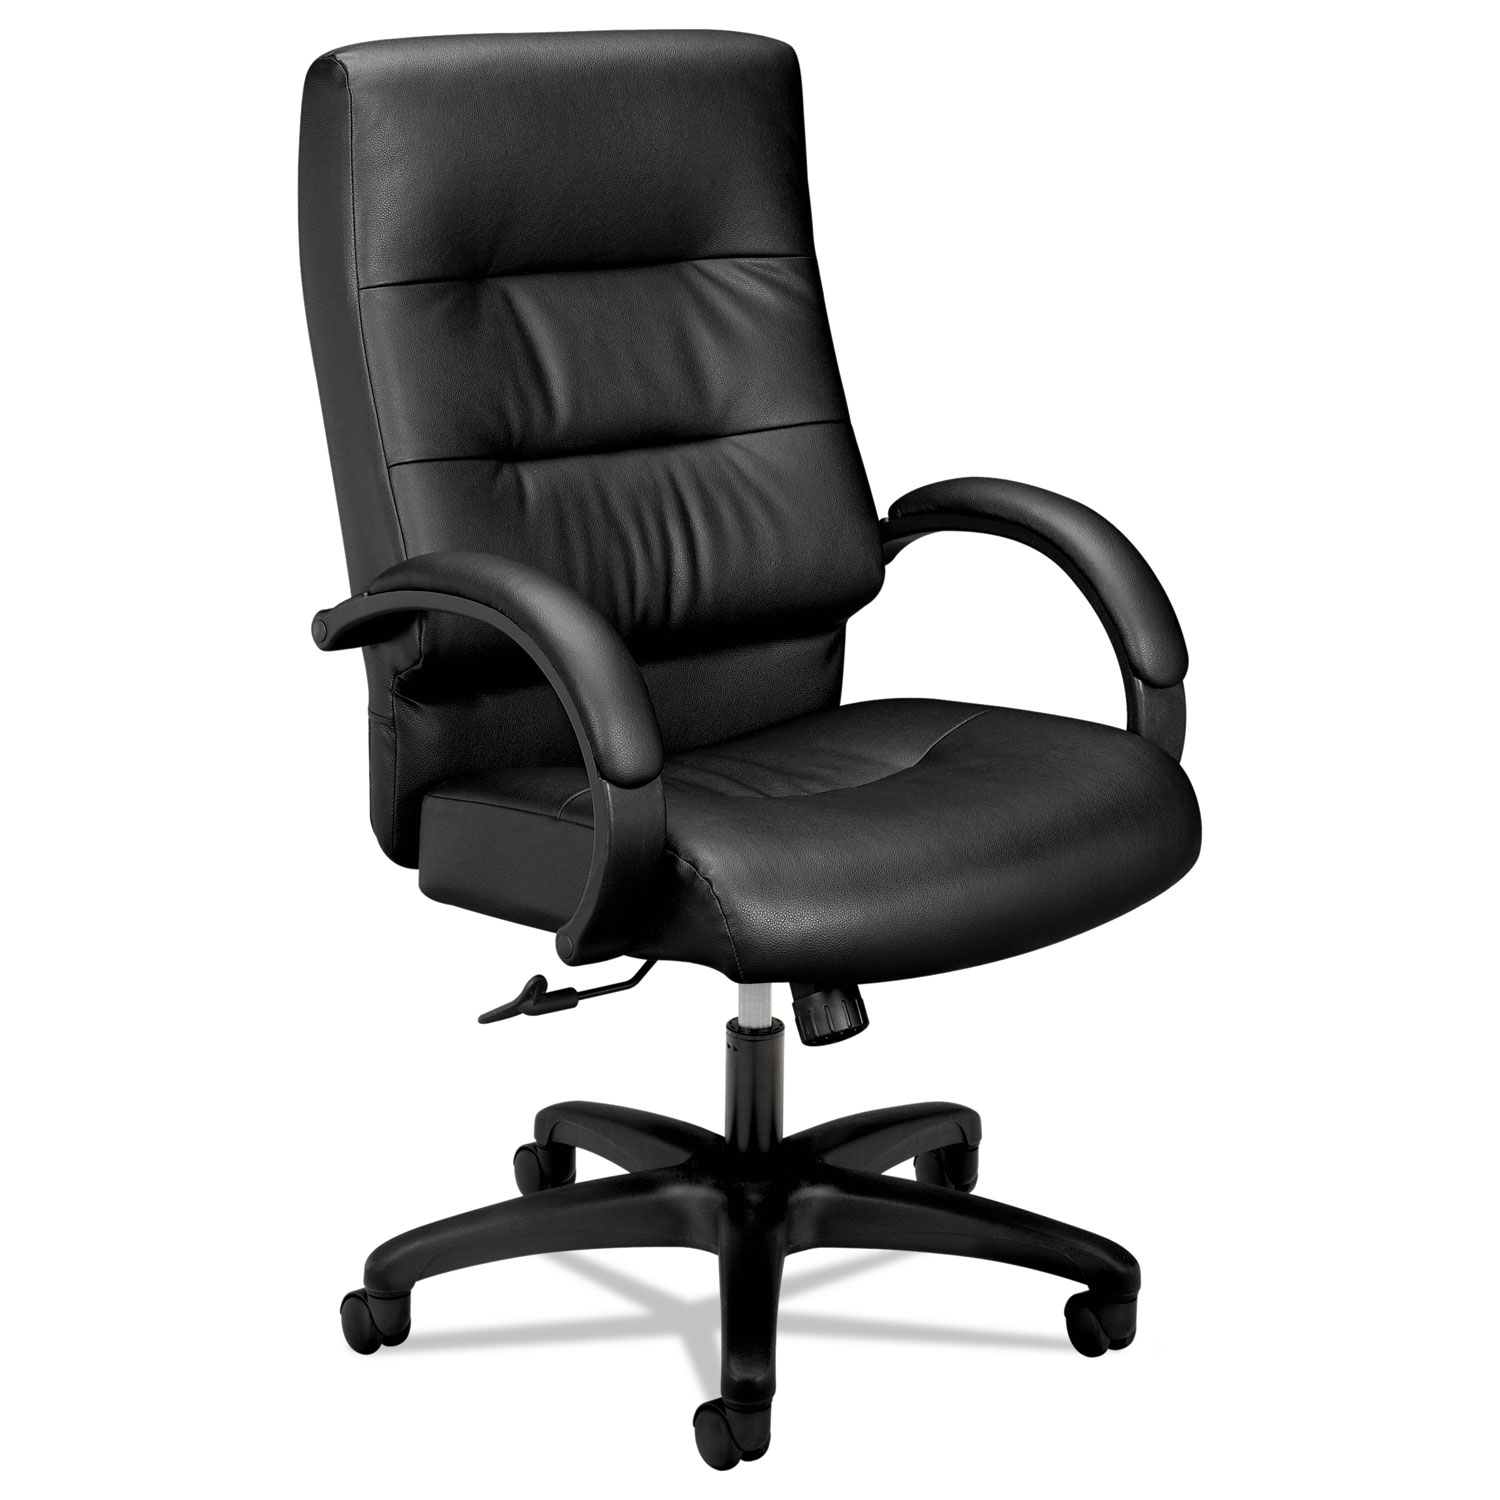  HON HVL691.SB11 VL690 Series Executive High-Back Chair, Supports up to 250 lbs., Black Seat/Black Back, Black Base (BSXVL691SB11) 